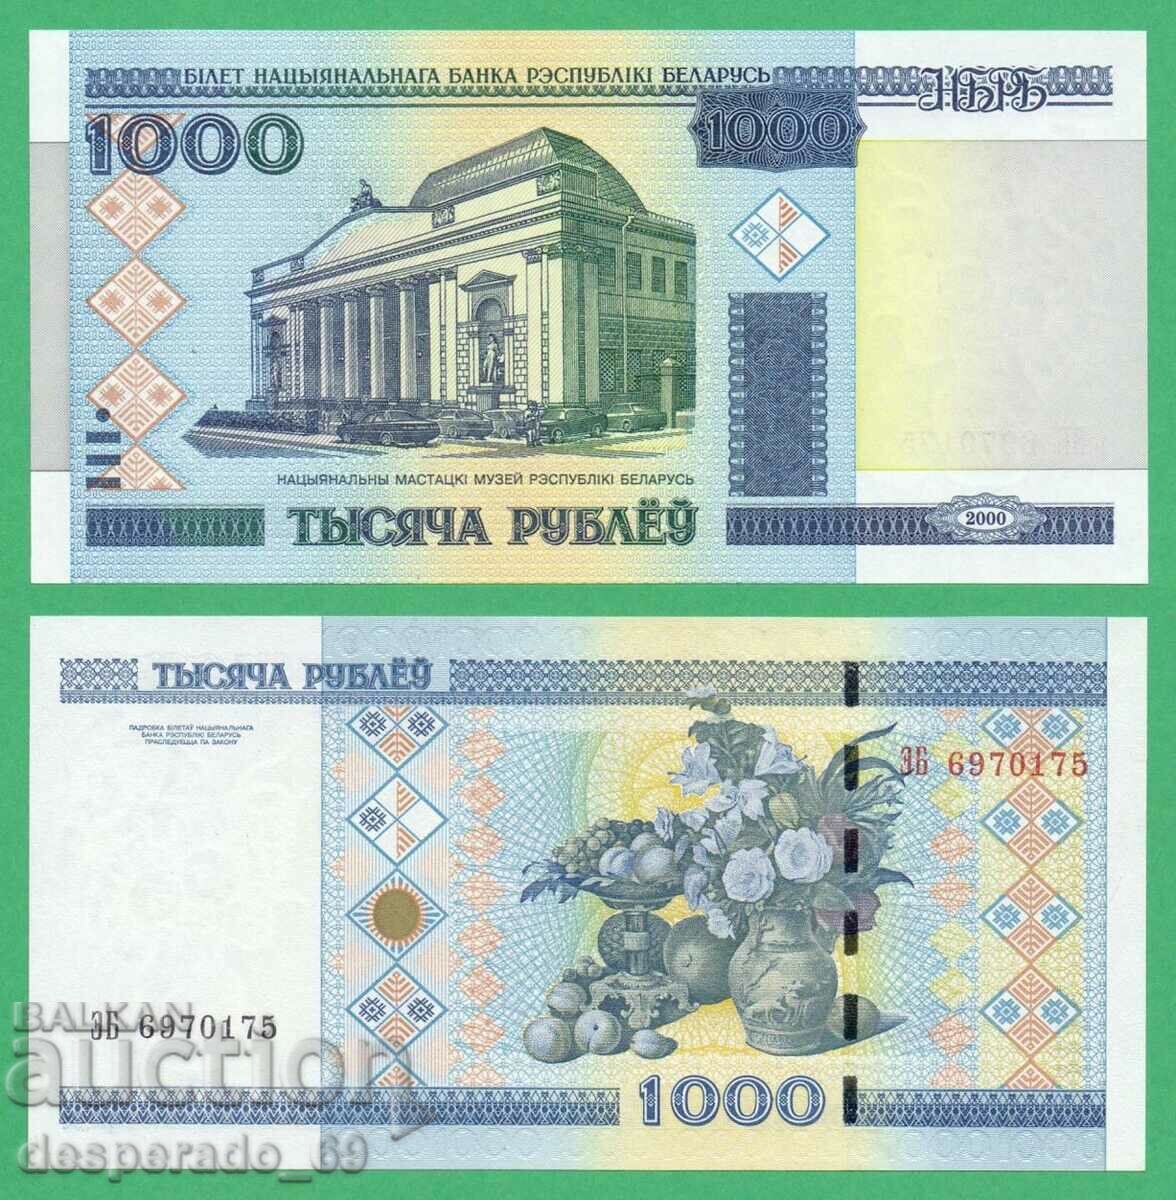 (¯`'•.¸ BELARUS 1000 ruble 2000 (2011) UNC ¸.•'´¯)